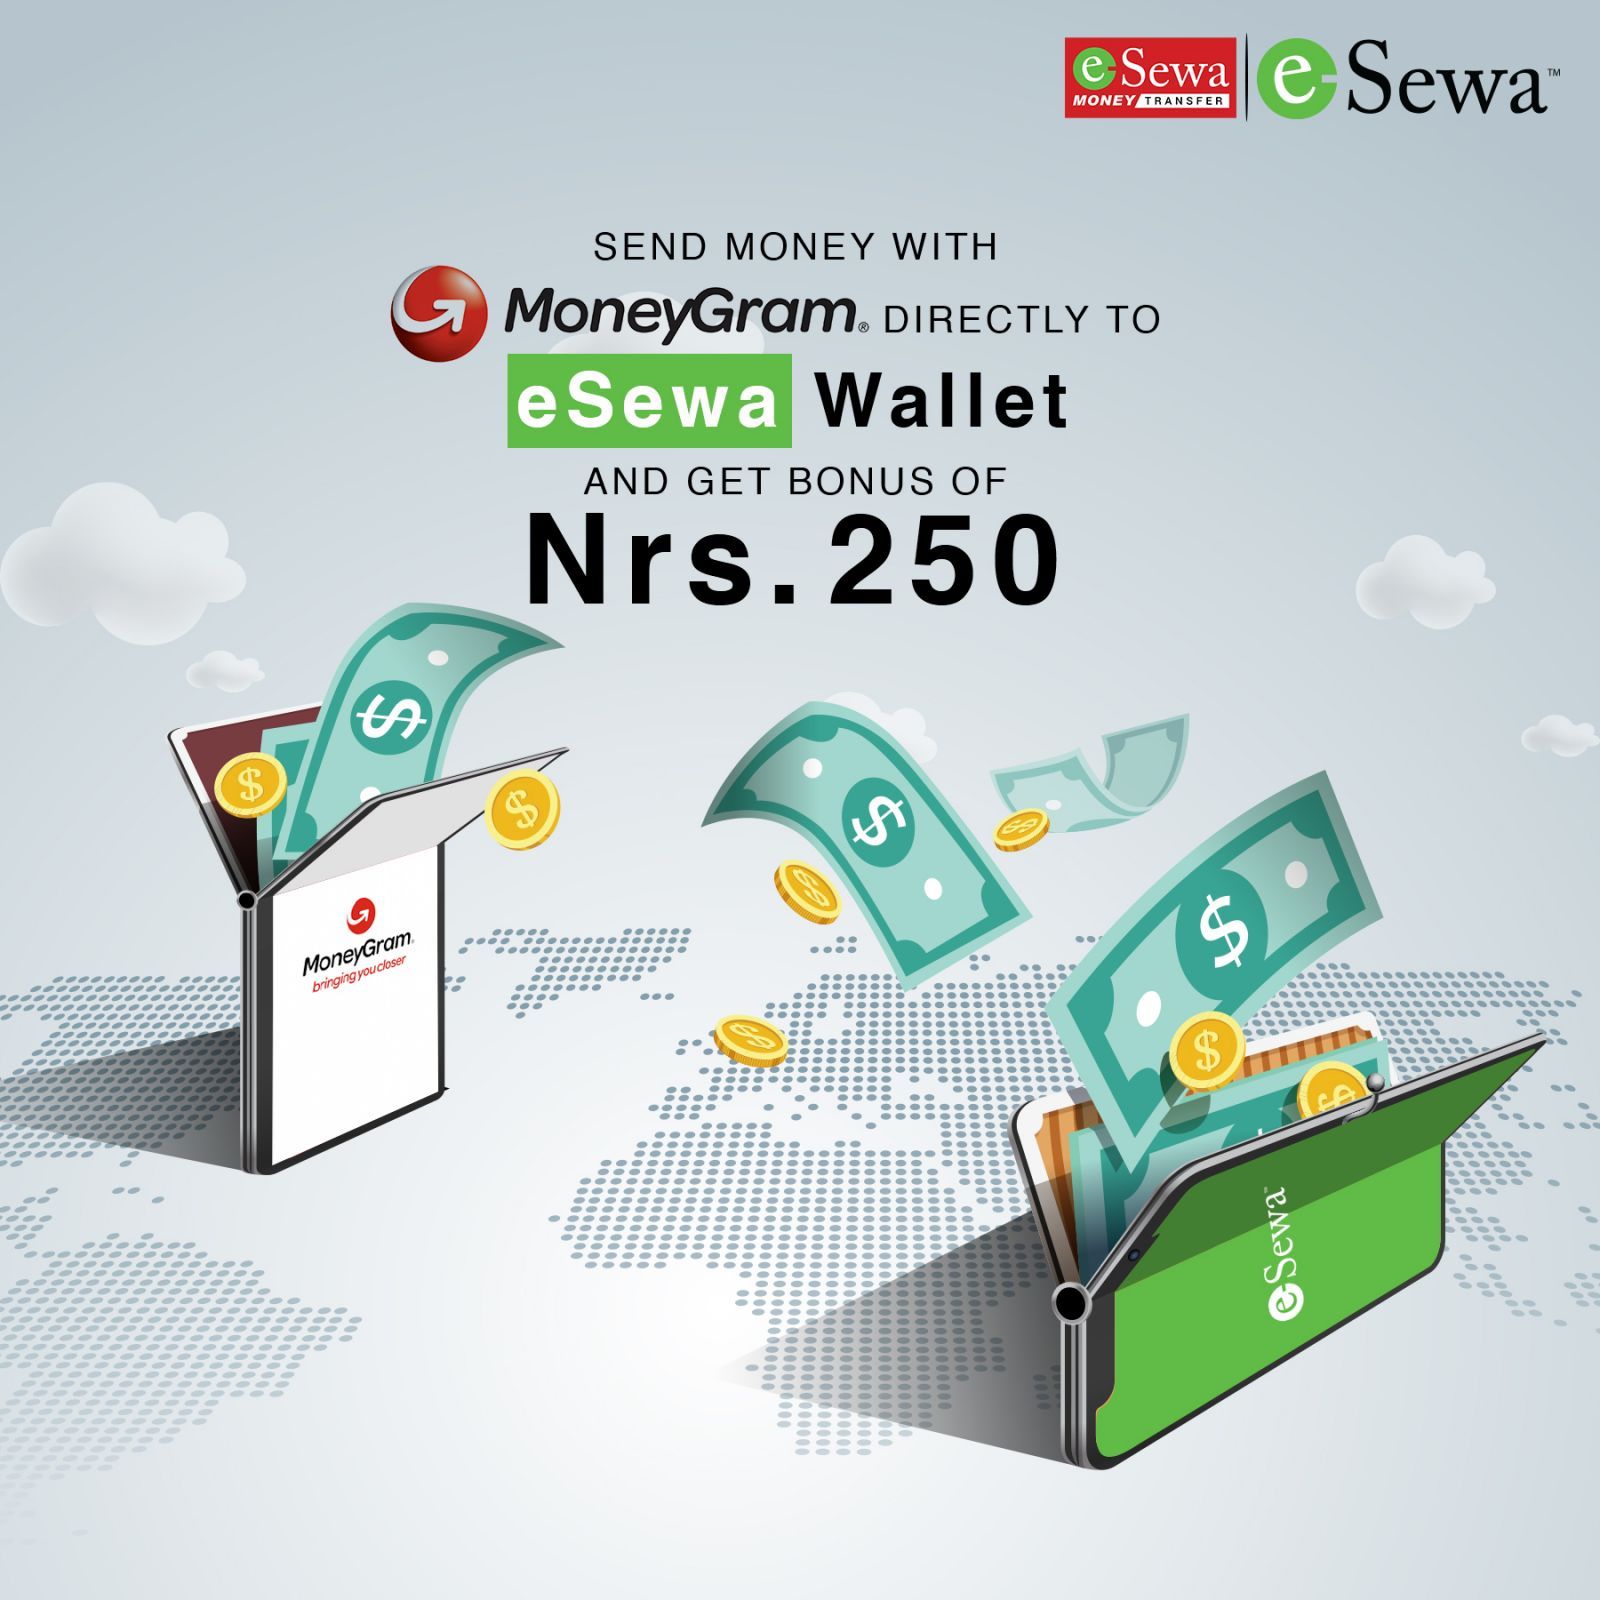 Rs 250 Bonus with MoneyGram and eSewa Money Transfer